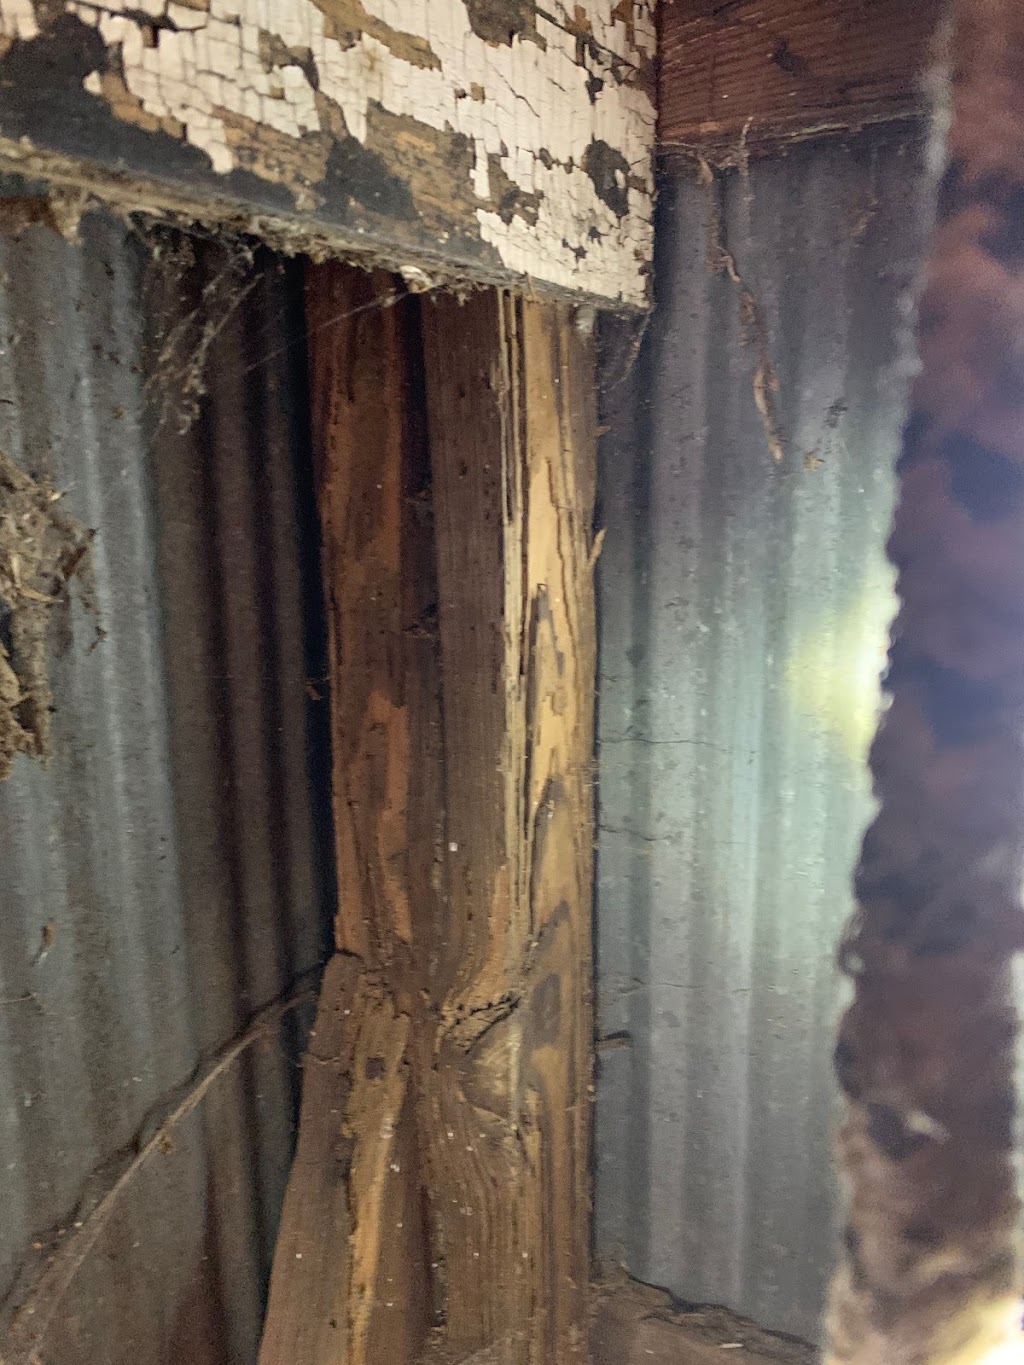 Bad Boys Termite & Pest Control | 821 Berrywood Ln, Galloway, NJ 08205 | Phone: (609) 317-5694